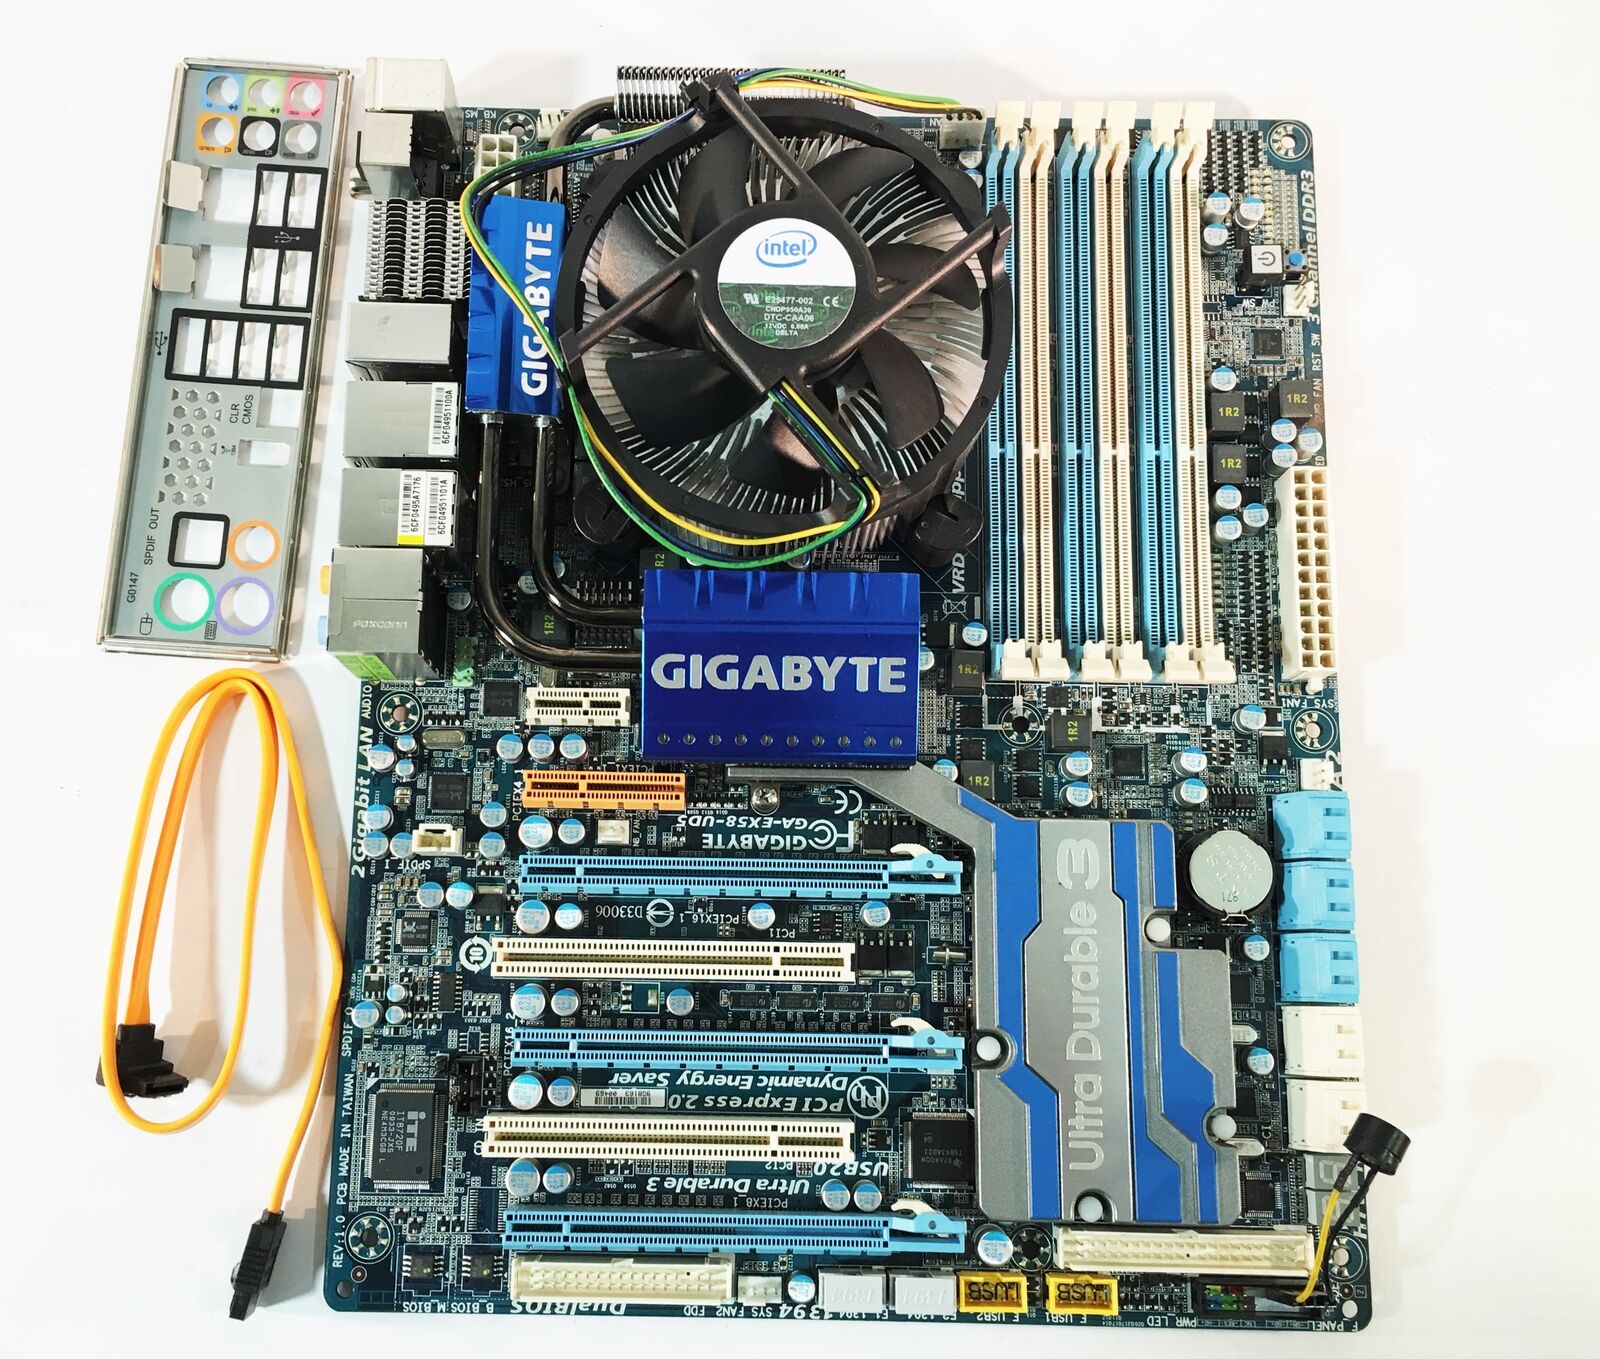 Gigabyte GA-EX58-UD5 Intel X58 LGA 1366 Motherboard w/CPU Fan & I/O Shield